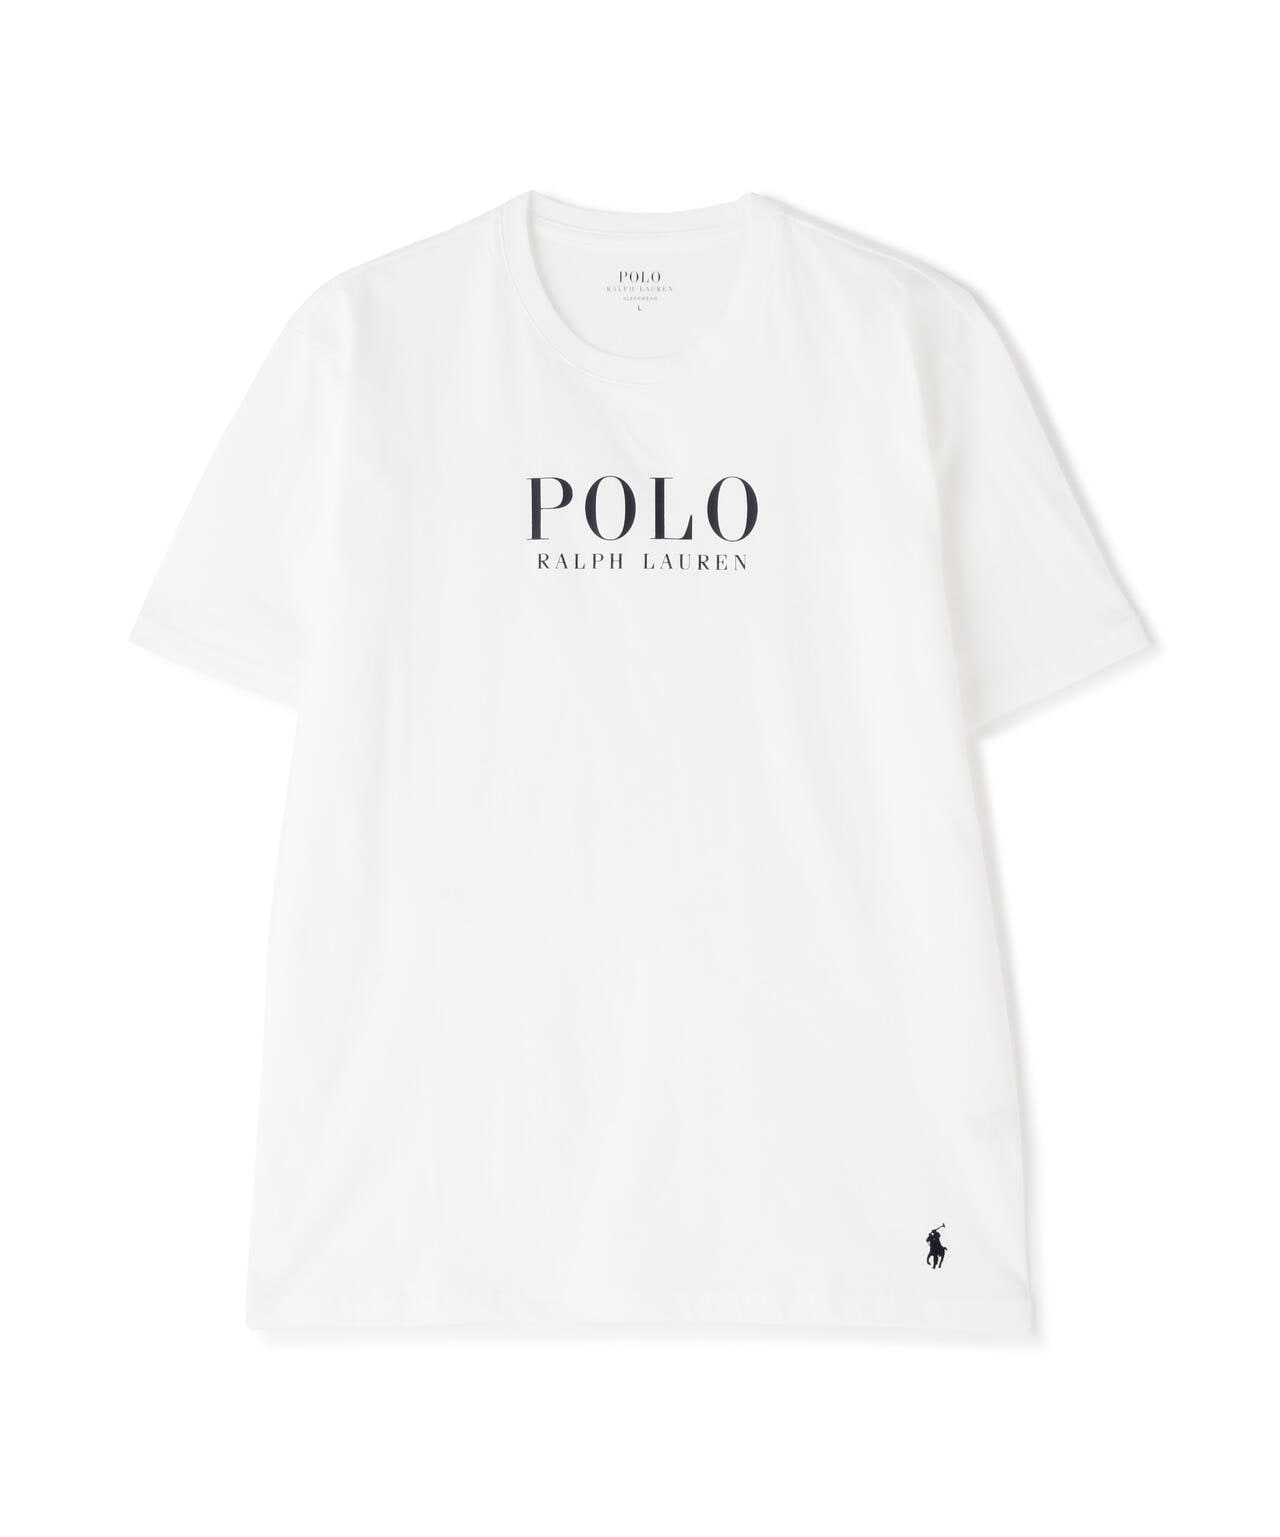 POLO RALPH LAUREN/ポロラルフローレン/Logo printed Short Sleeve